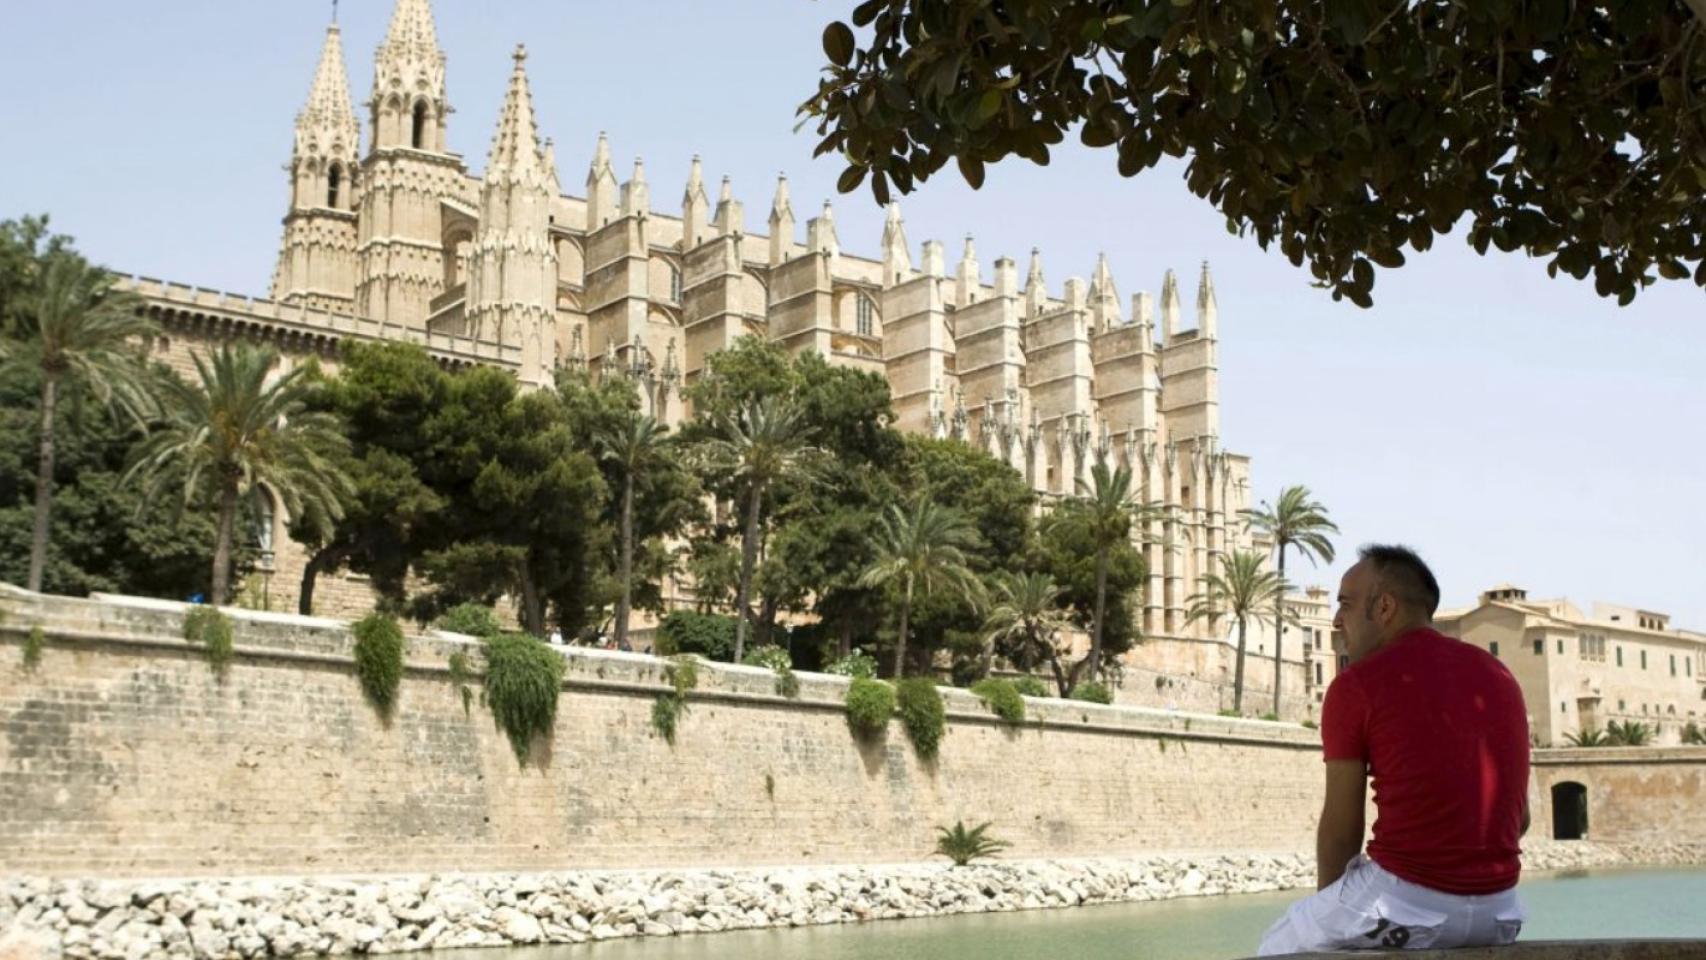 Imagen de un turista frente a la catedral de Palma de Mallorca.